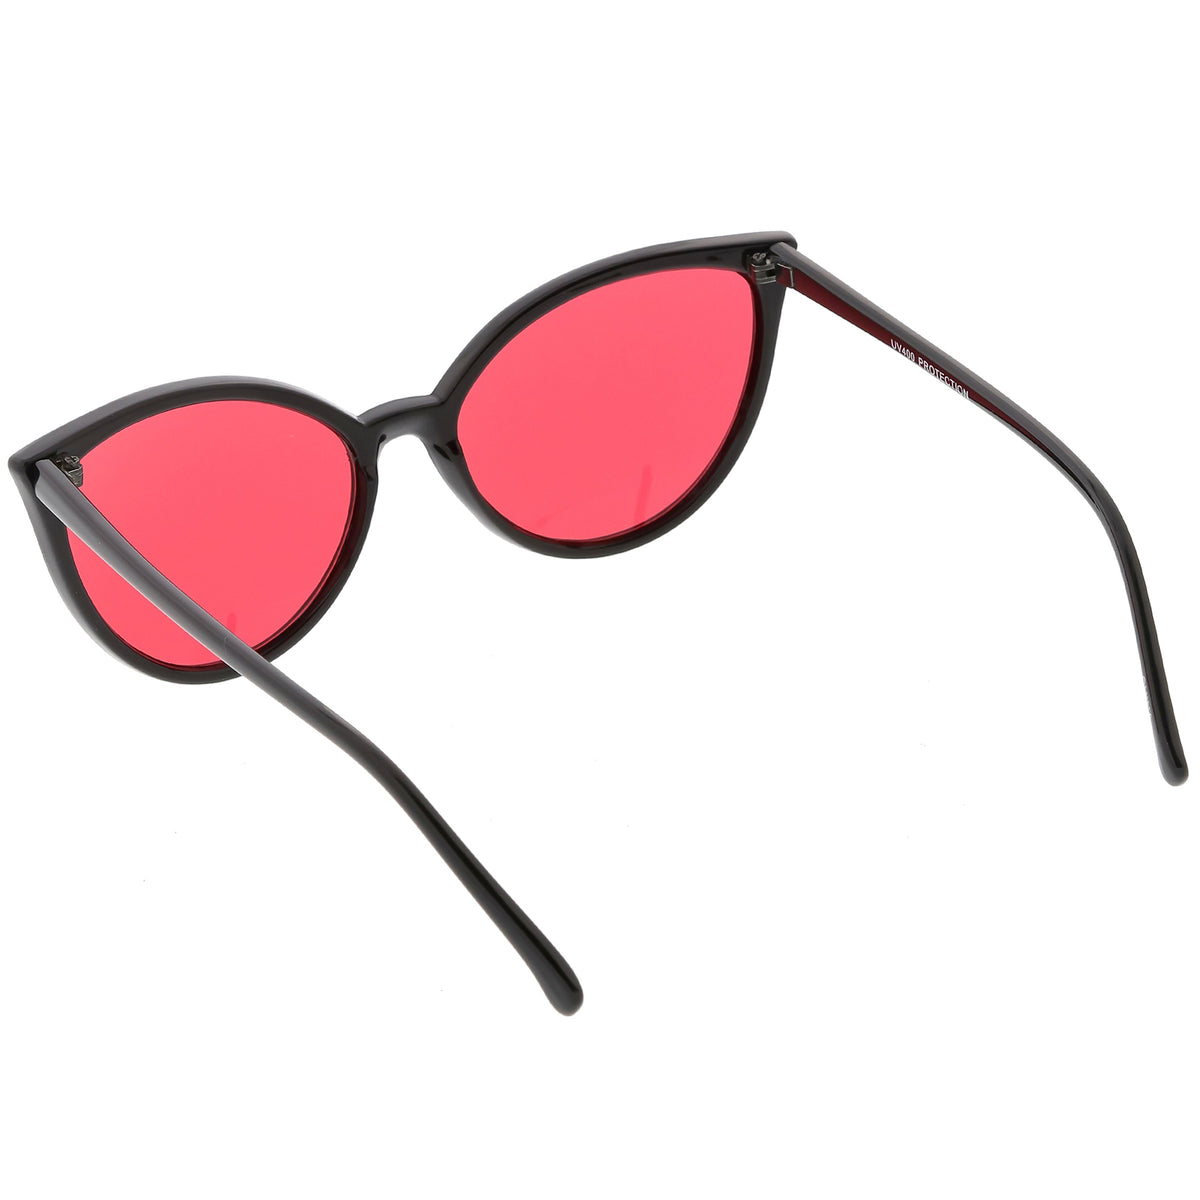 Unique Slim Cat Eye Sunglasses Round Color Tinted Lens 54mm Sunglassla 